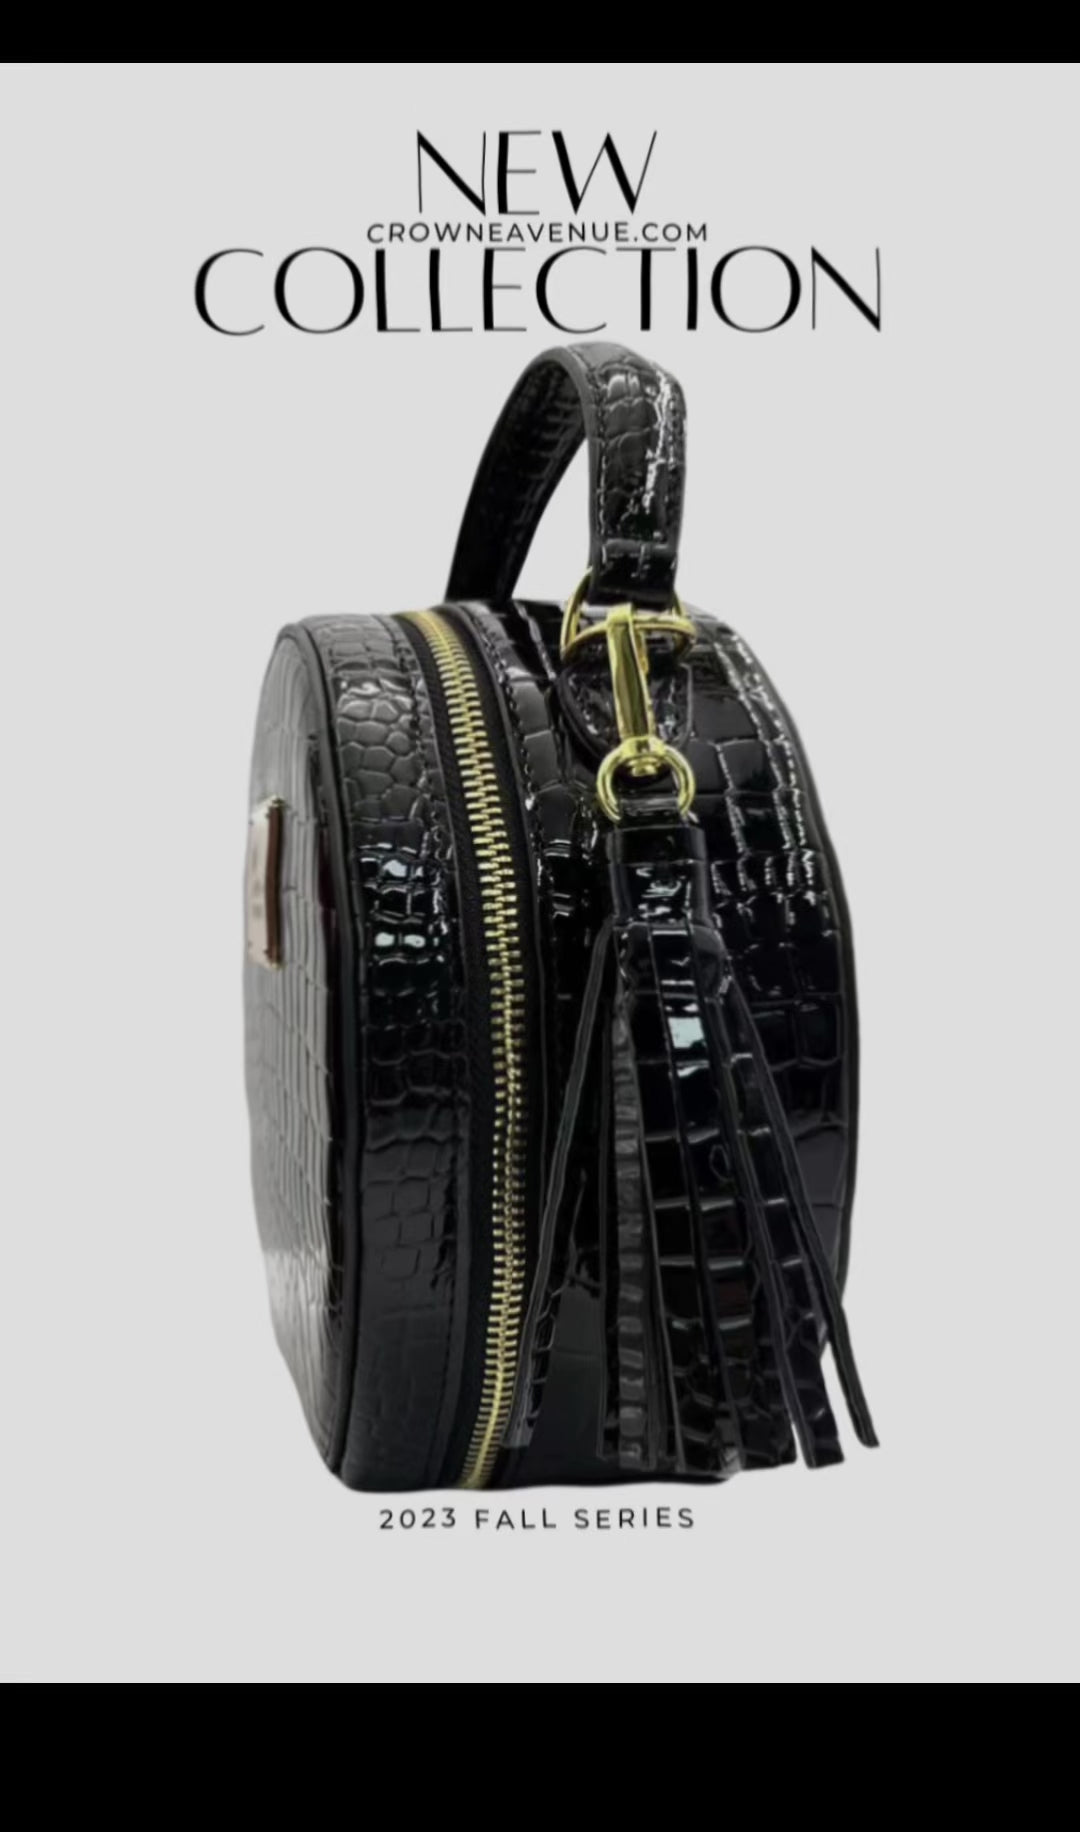 Black Albany Handbag